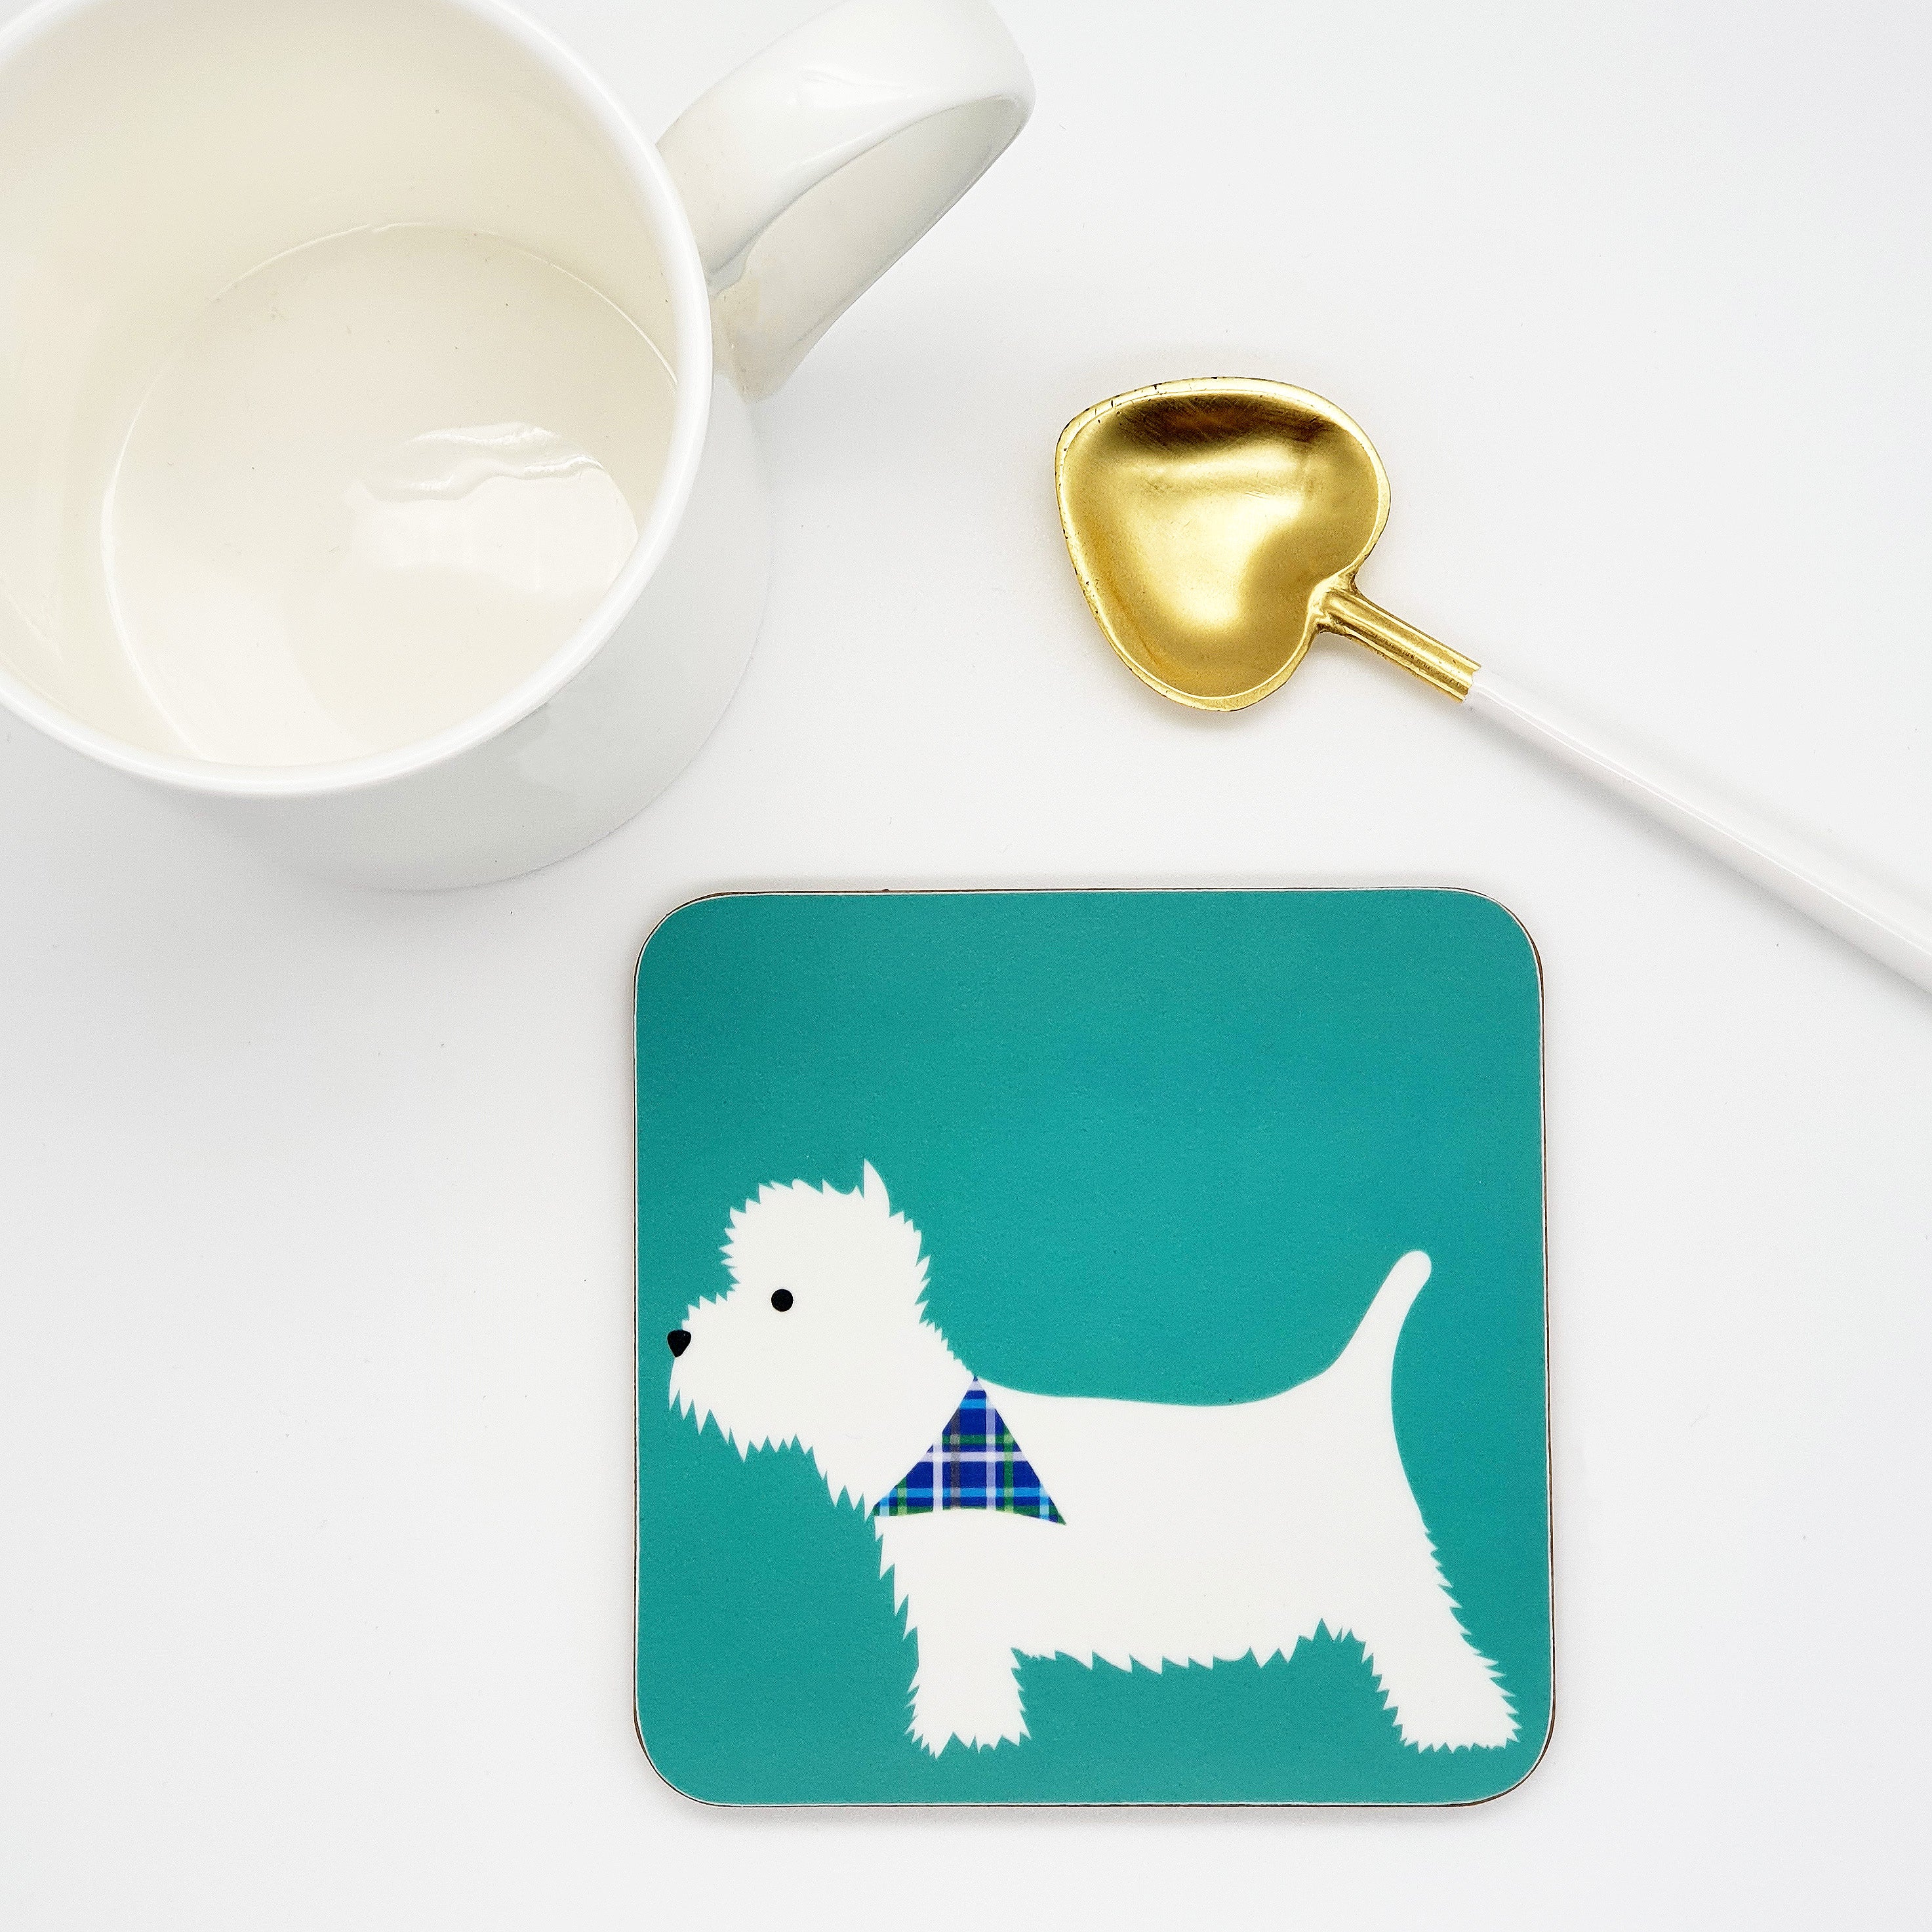 West Highland Terrier (Westie) Coasters - Set of 4